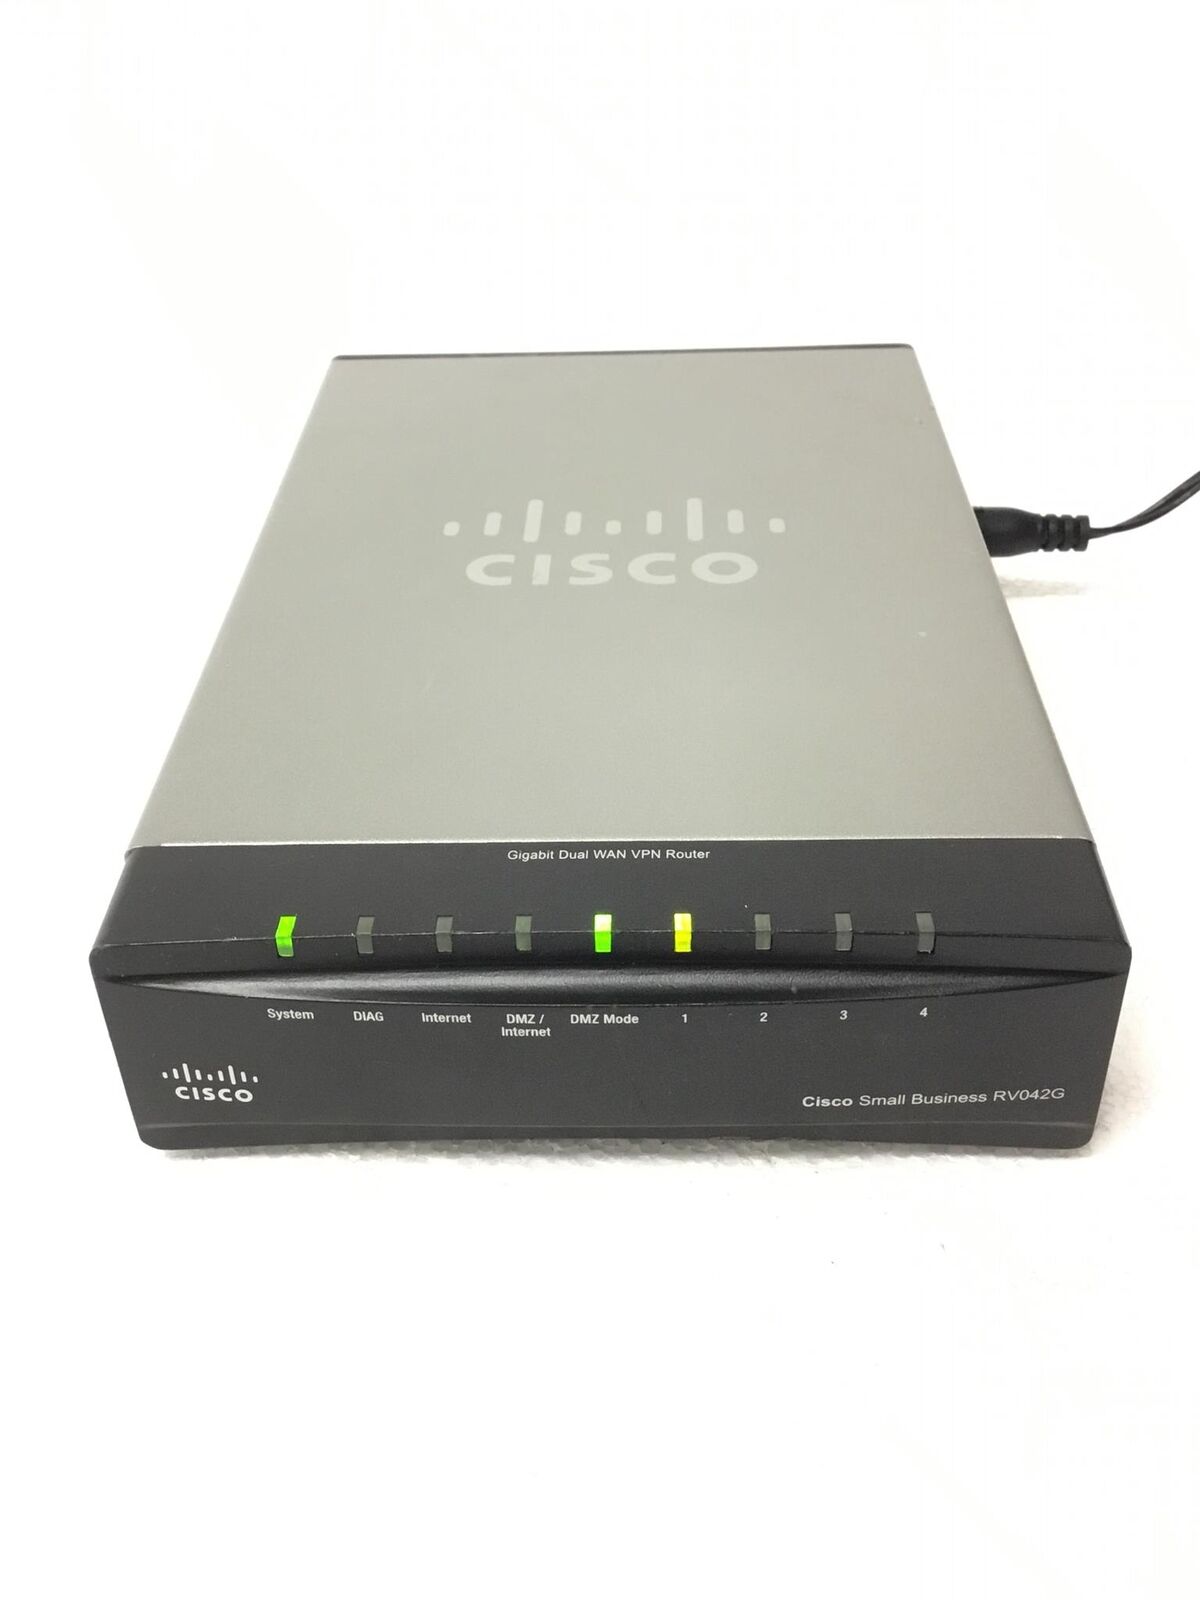 Cisco RV042G Small Business Gigabit Dual WAN VPN Router No Ac Adapter WORKING